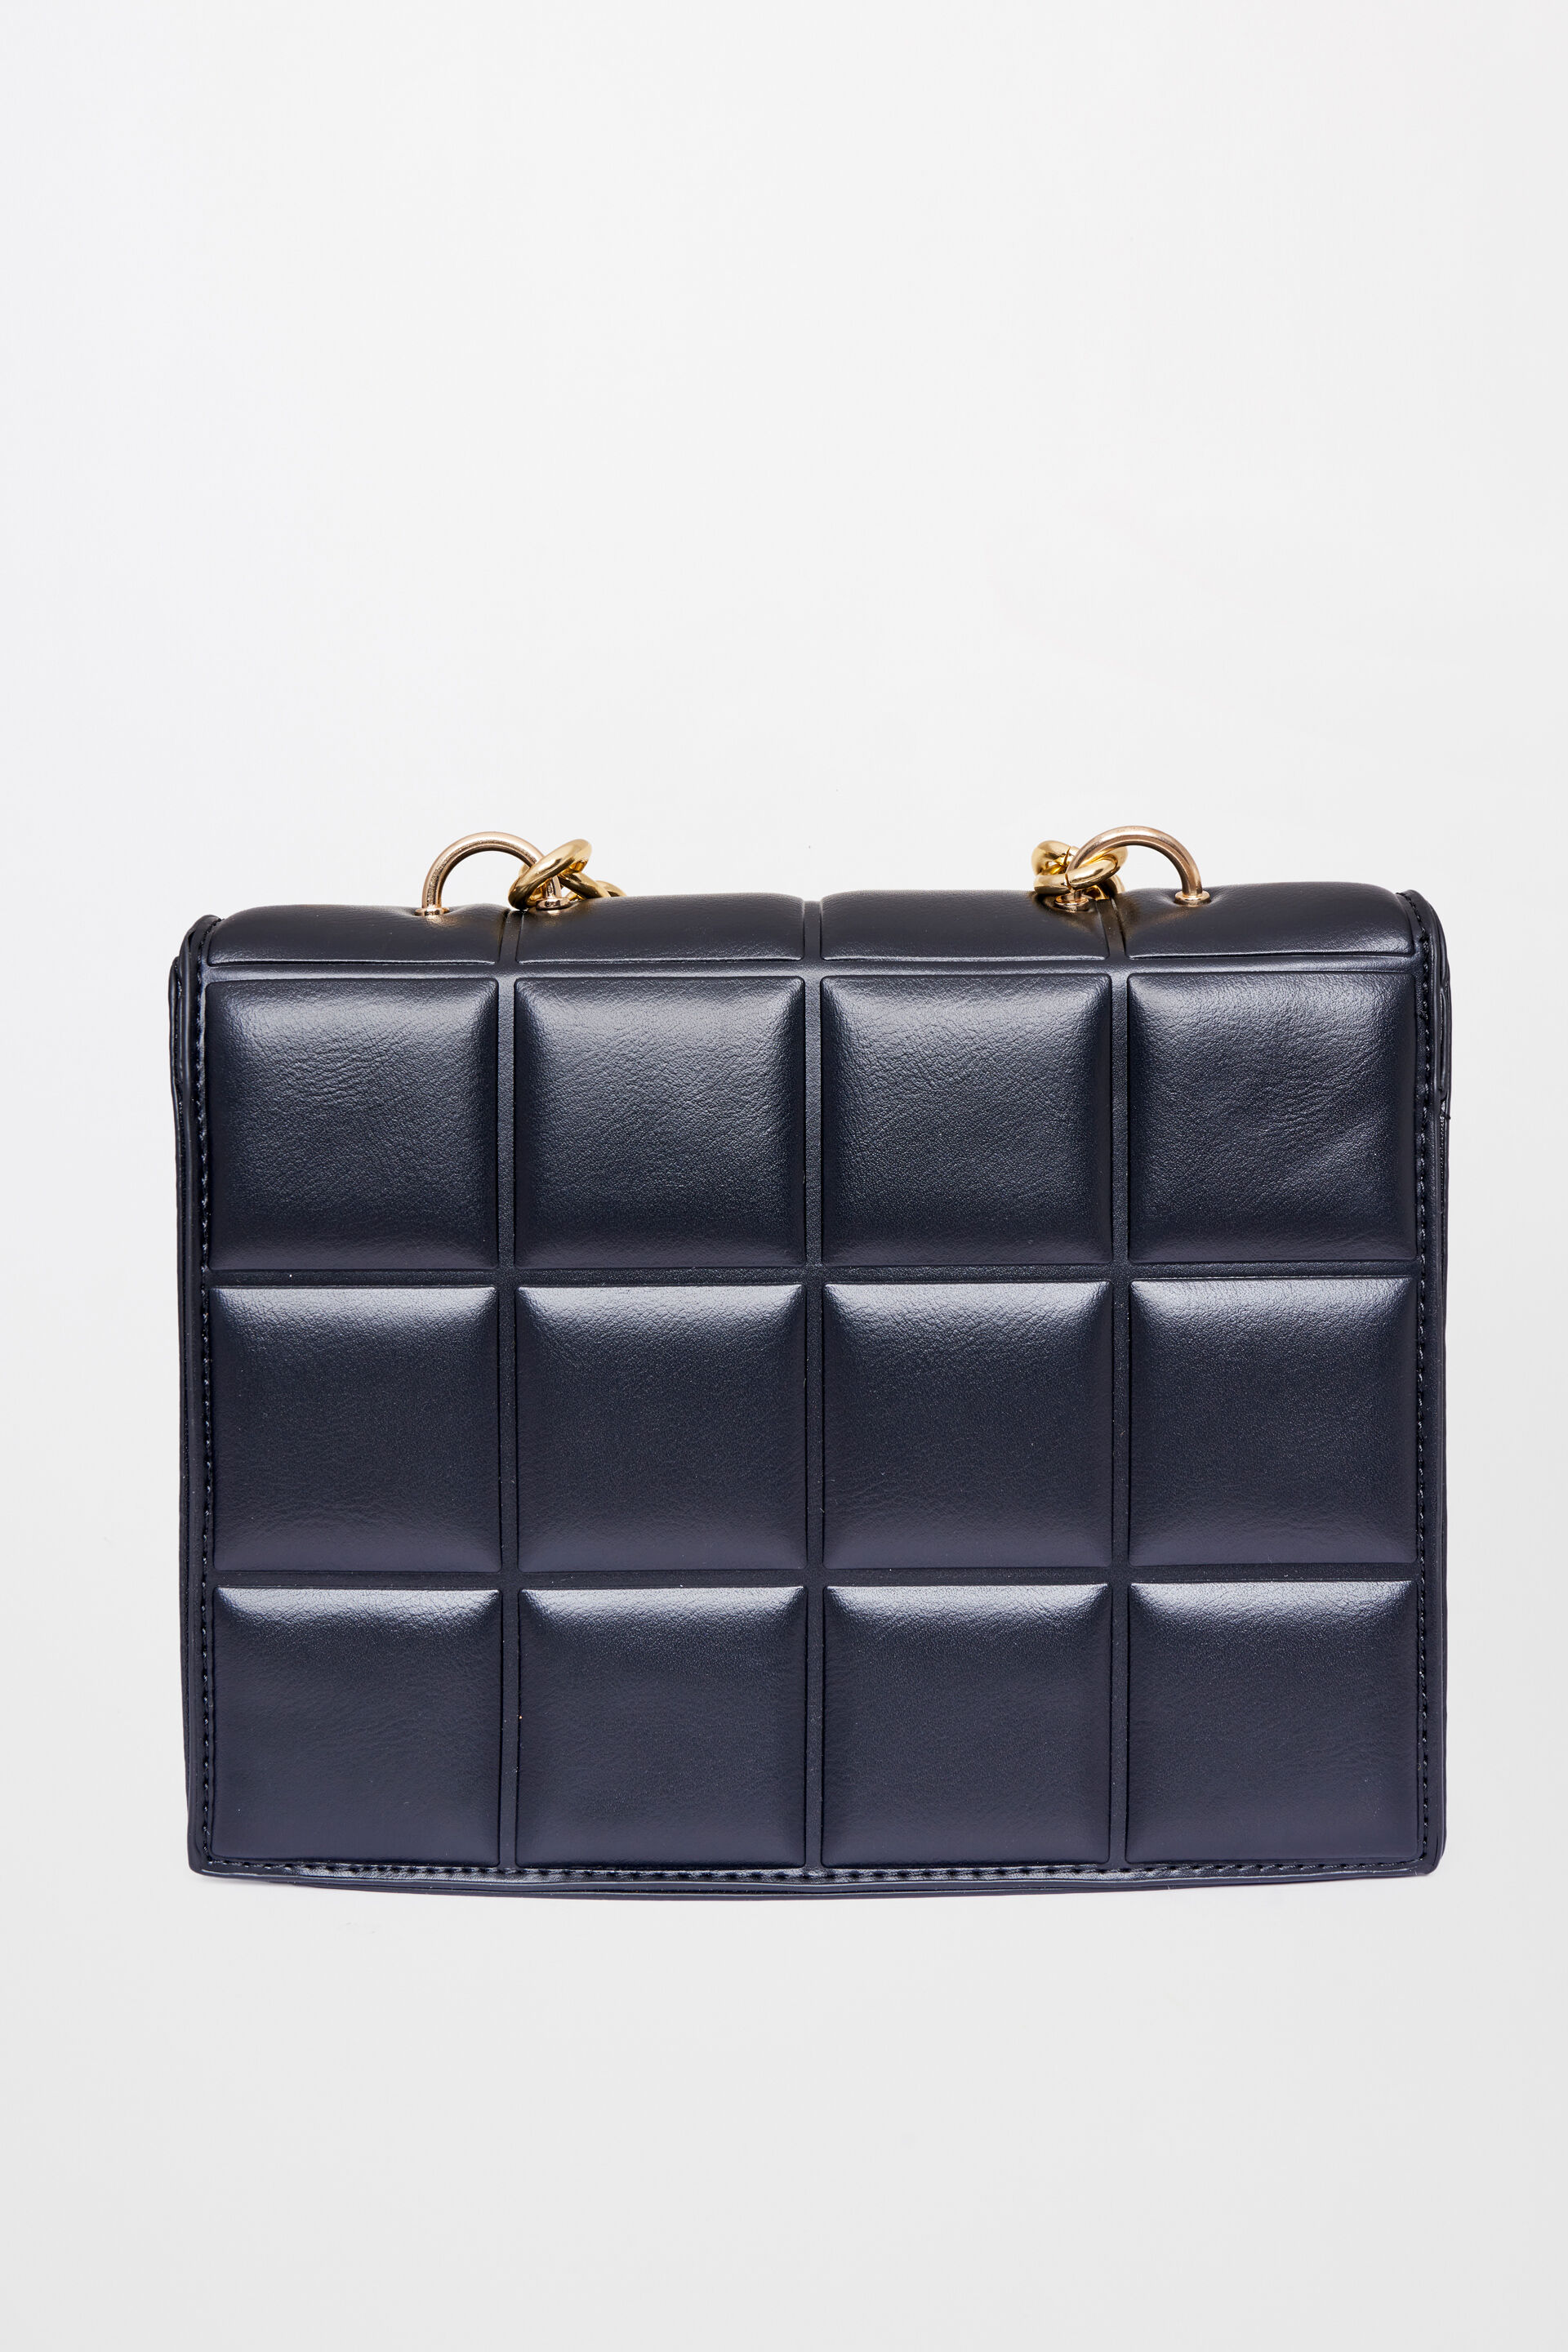 Leather Plain Ladies Black Handbag, 3 L, Size: 26 X 22 CM at Rs 1599/piece  in New Delhi